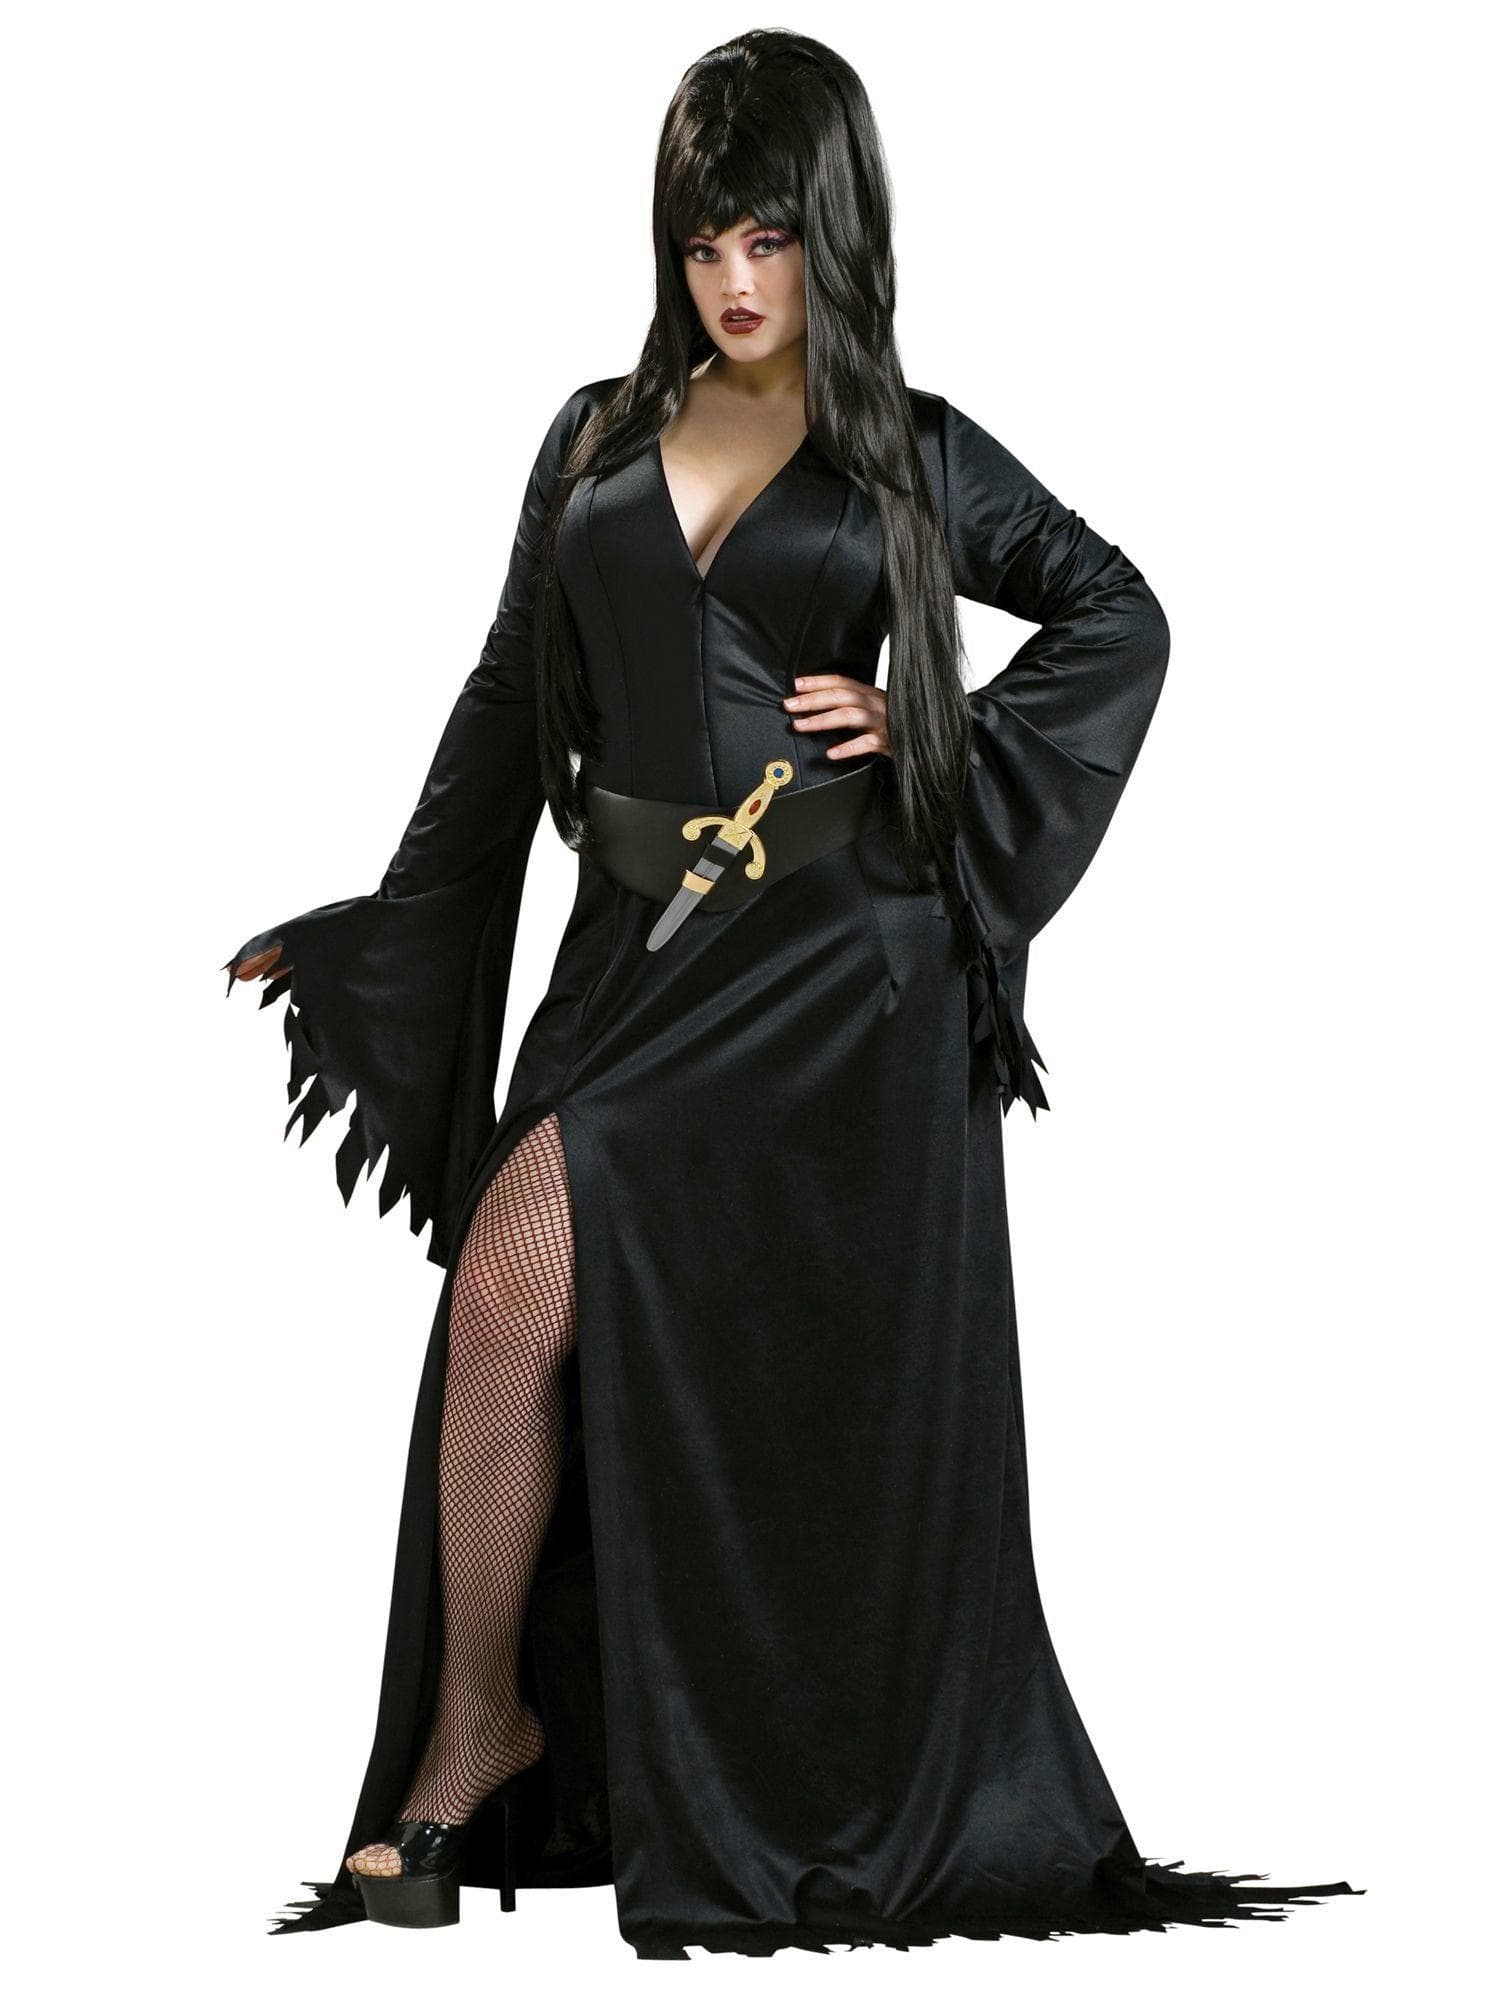 Adult Plus Size Elvira Mistress of the Dark Costume - costumes.com